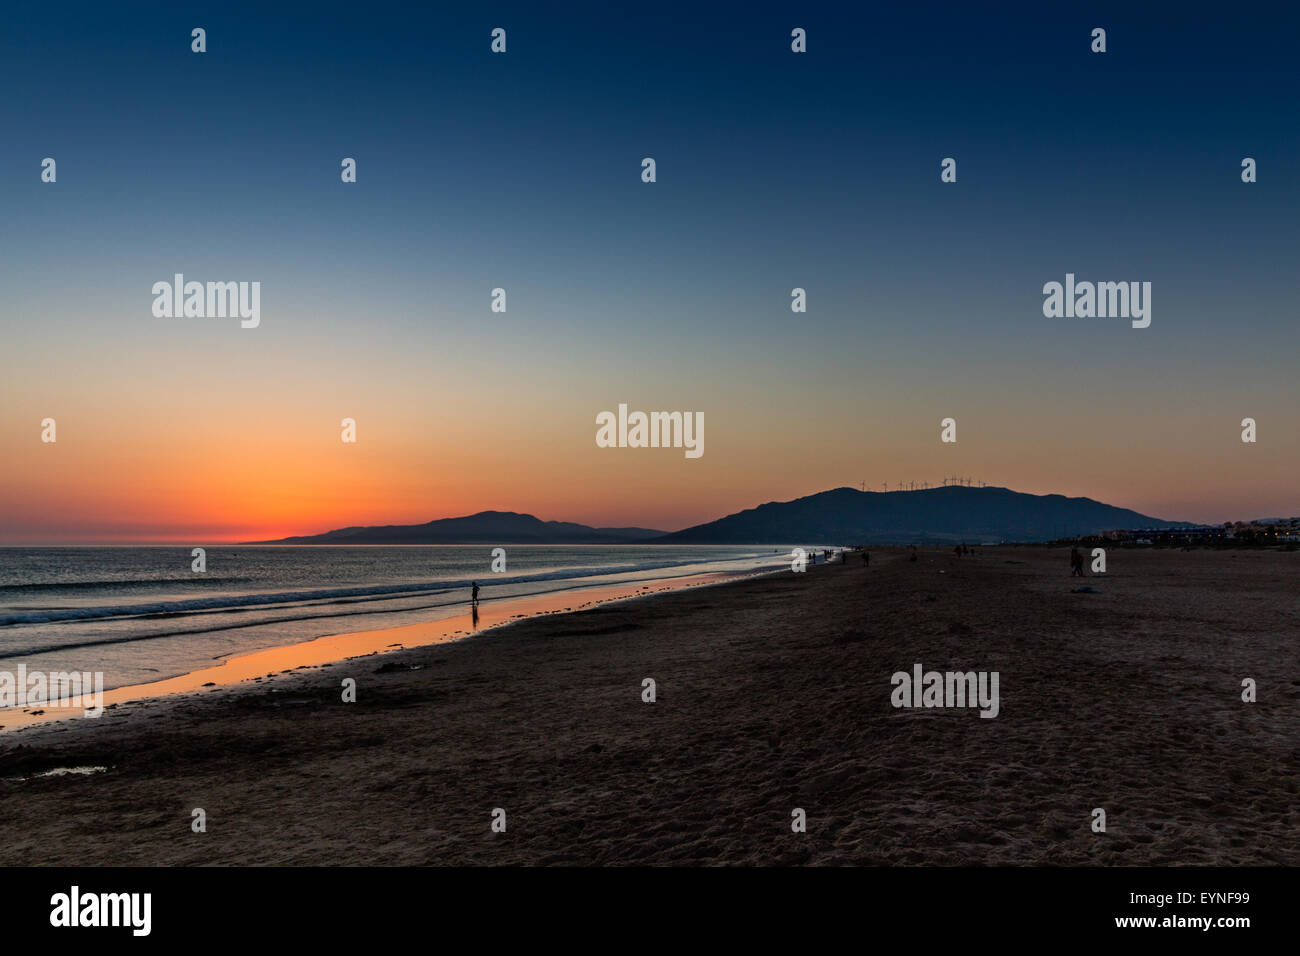 Sunset over the ocean, Tarifa, Spain Stock Photo